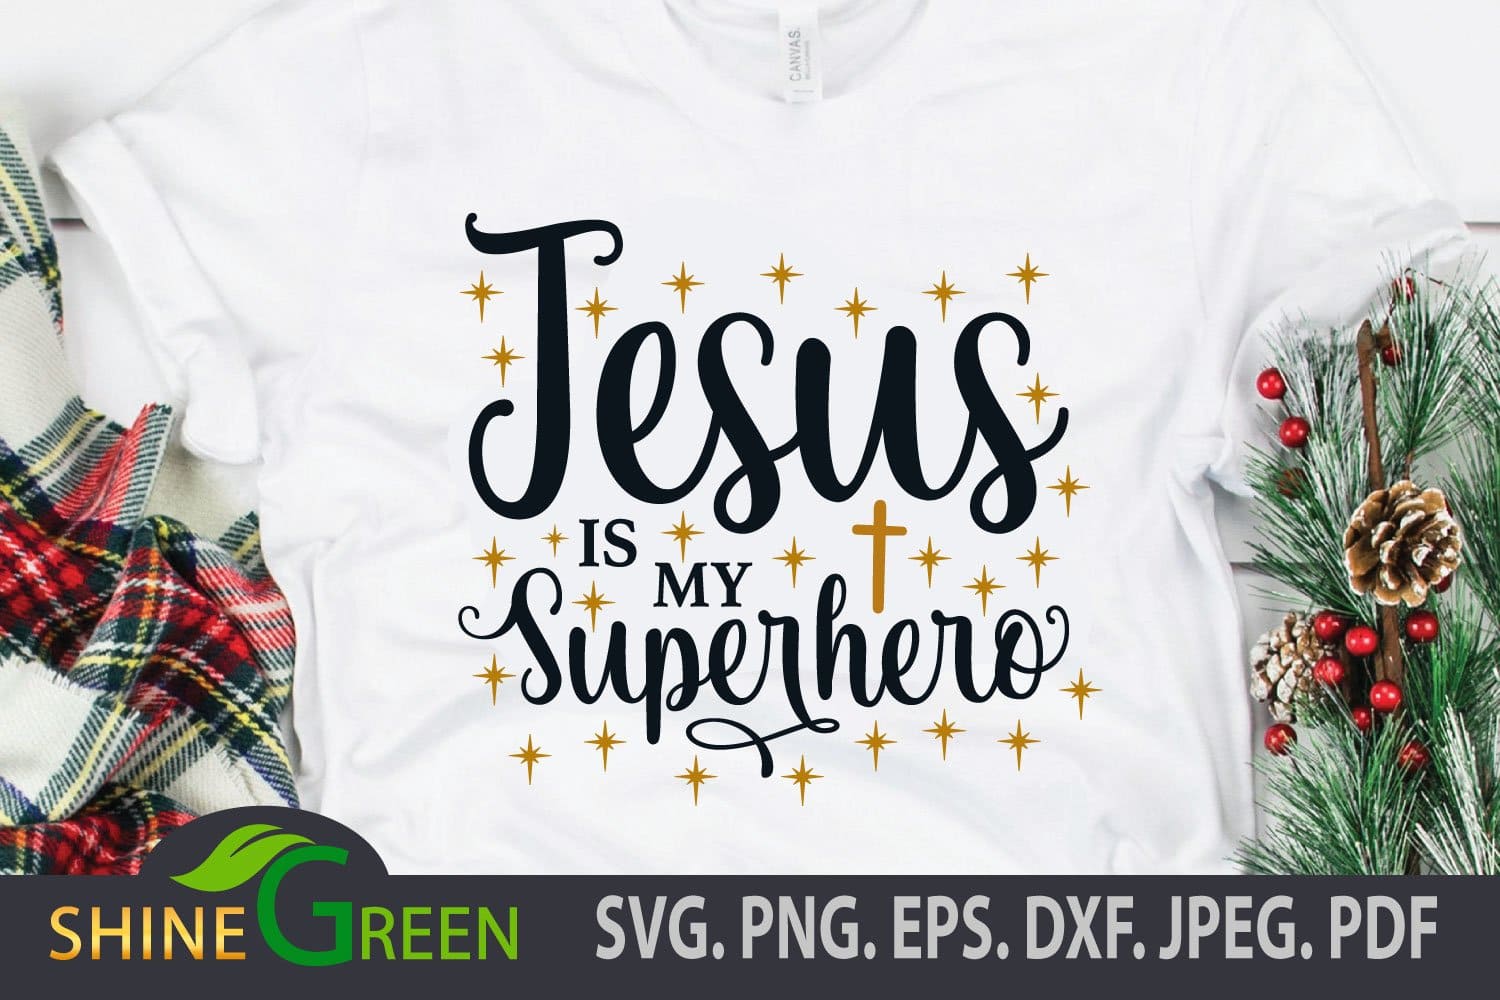 "Jesus is my superhero" - the inscription on a white T-shirt.